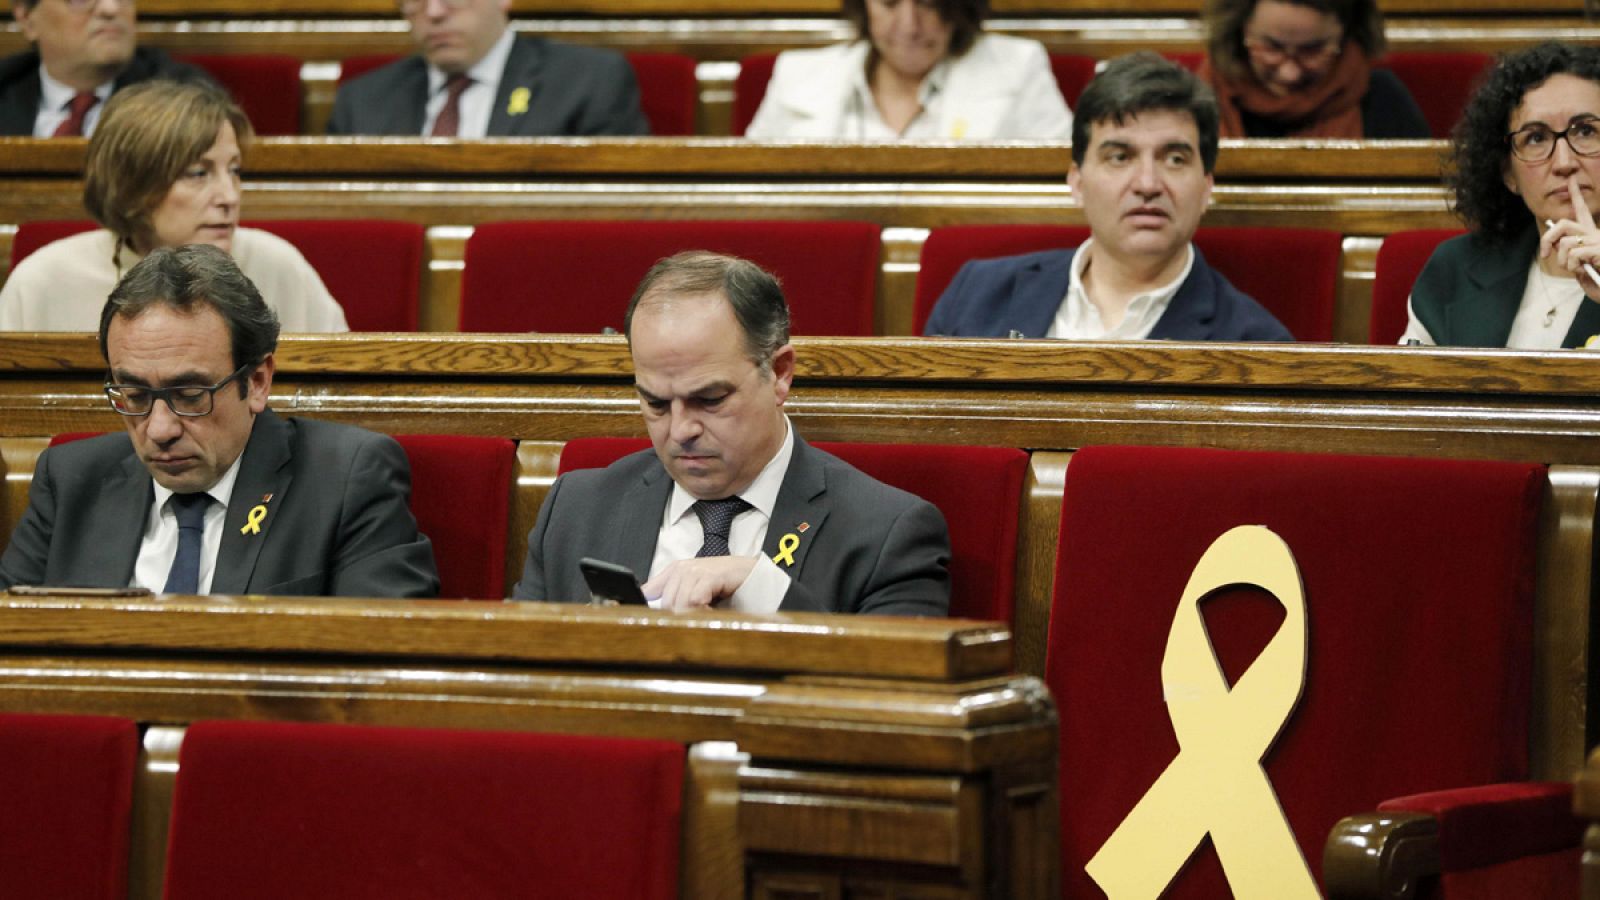 Los diputados de JxCat, Jordi Turull, y Josep Rull  durante un pleno del Parlament